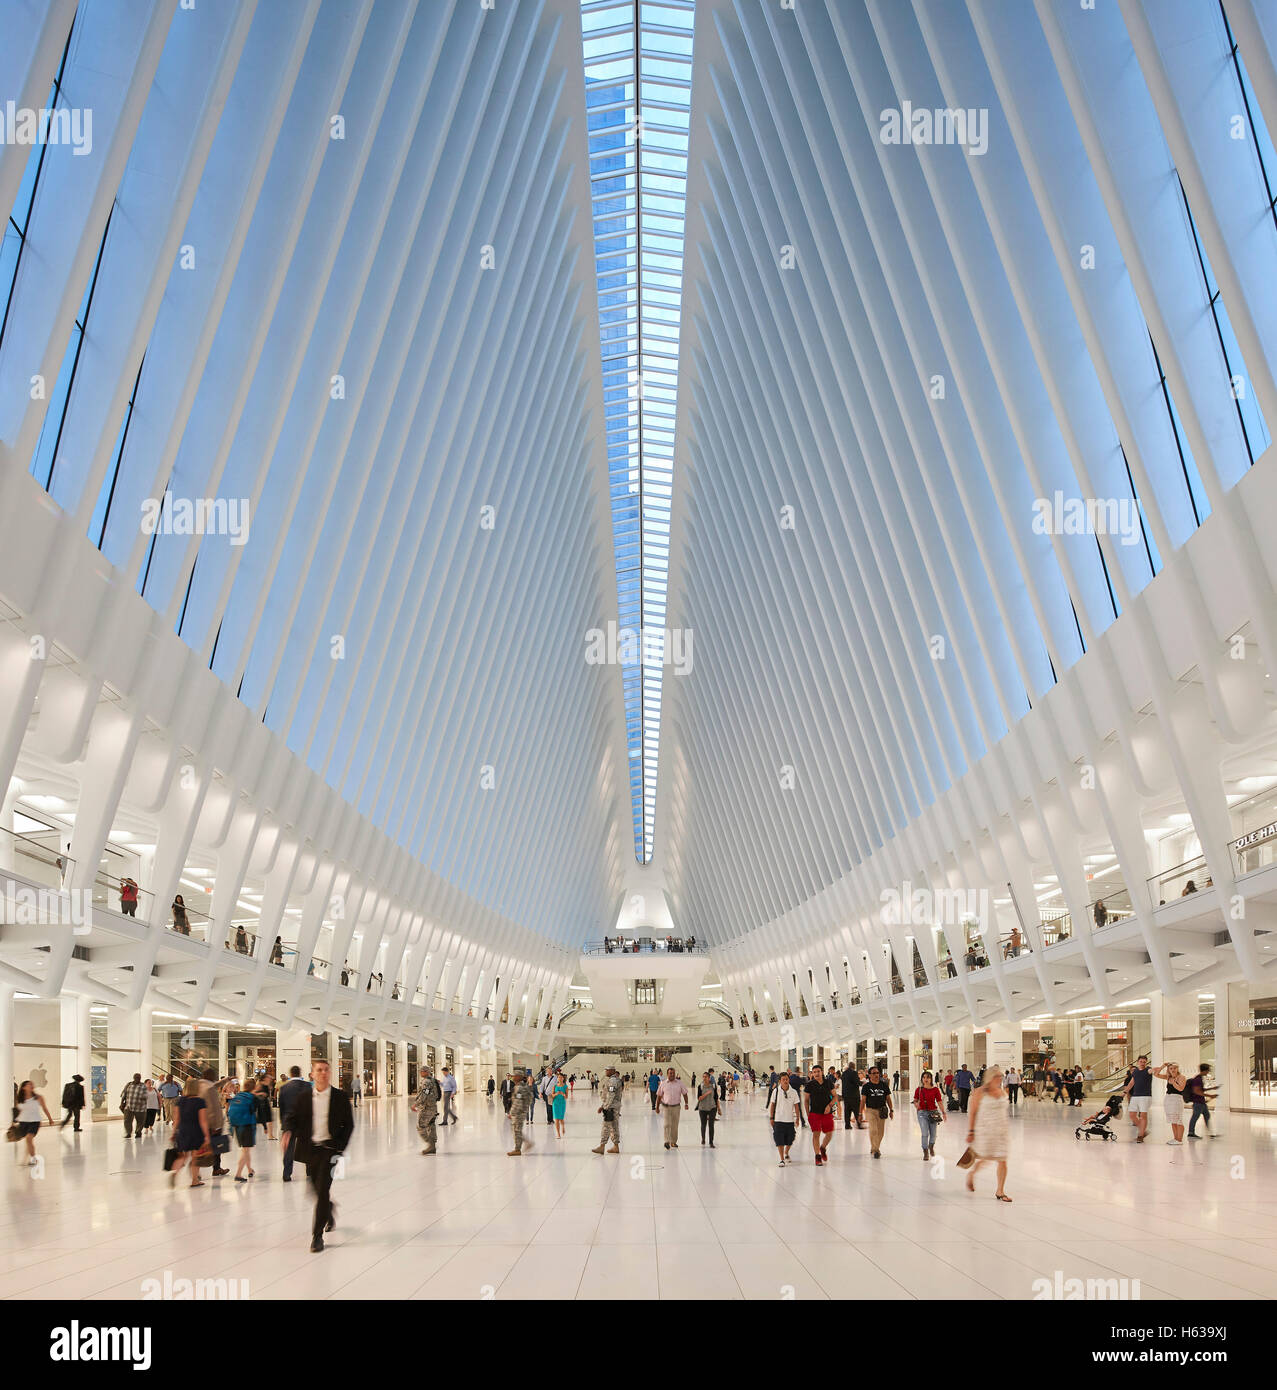 Cathedral-like transit hall interior from arrival level. The Oculus, World Trade Center Transportation Hub, New York, United States. Architect: Santiago Calatrava, 2016. Stock Photo